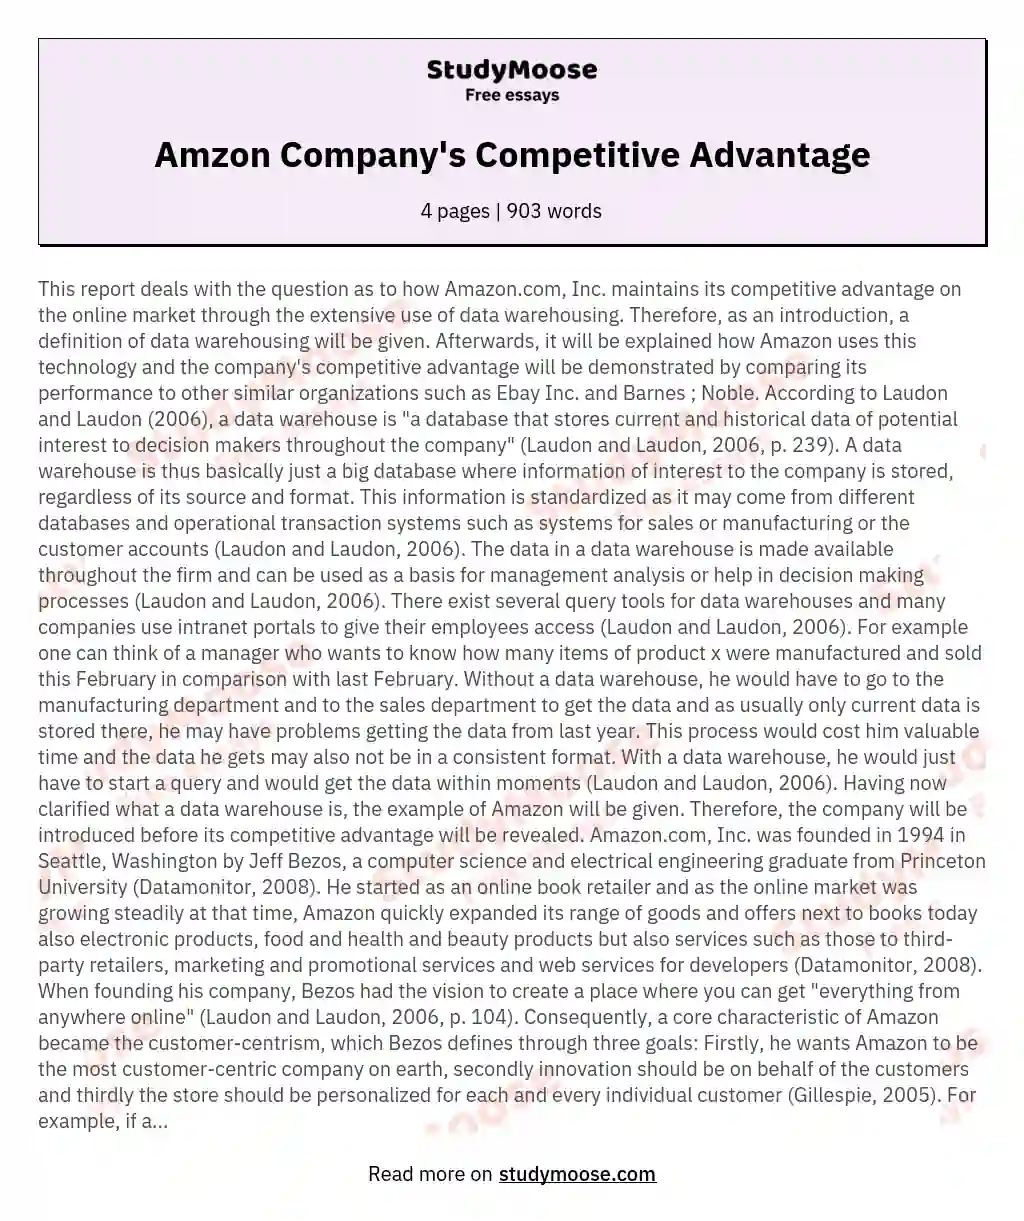 Amzon Company's Competitive Advantage essay